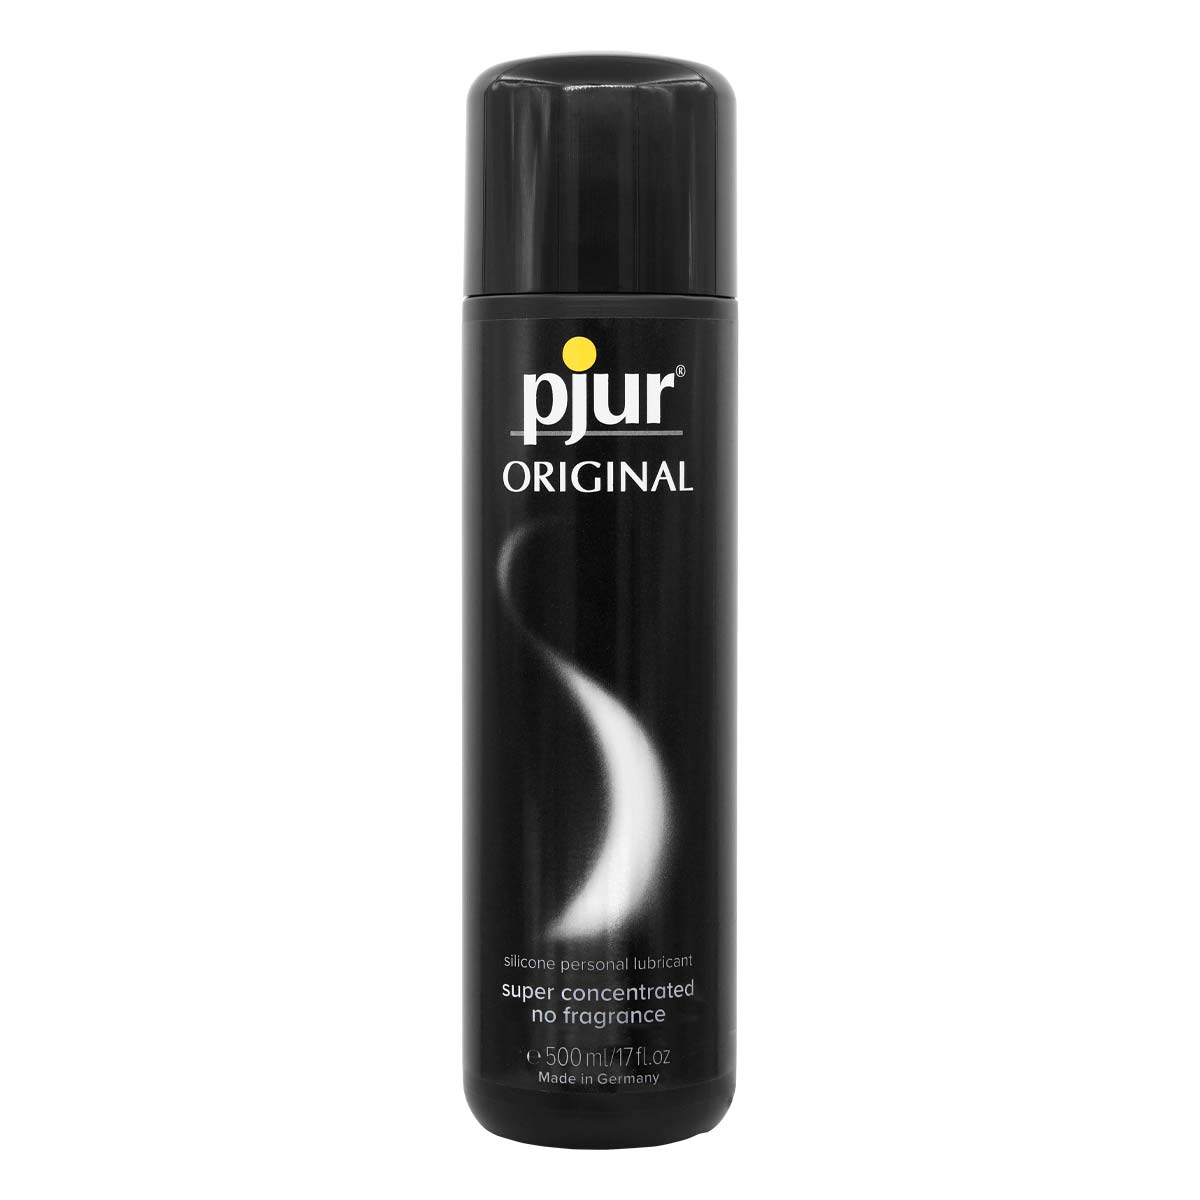 pjur ORIGINAL 500ml 矽性潤滑劑 - 國際版-p_2